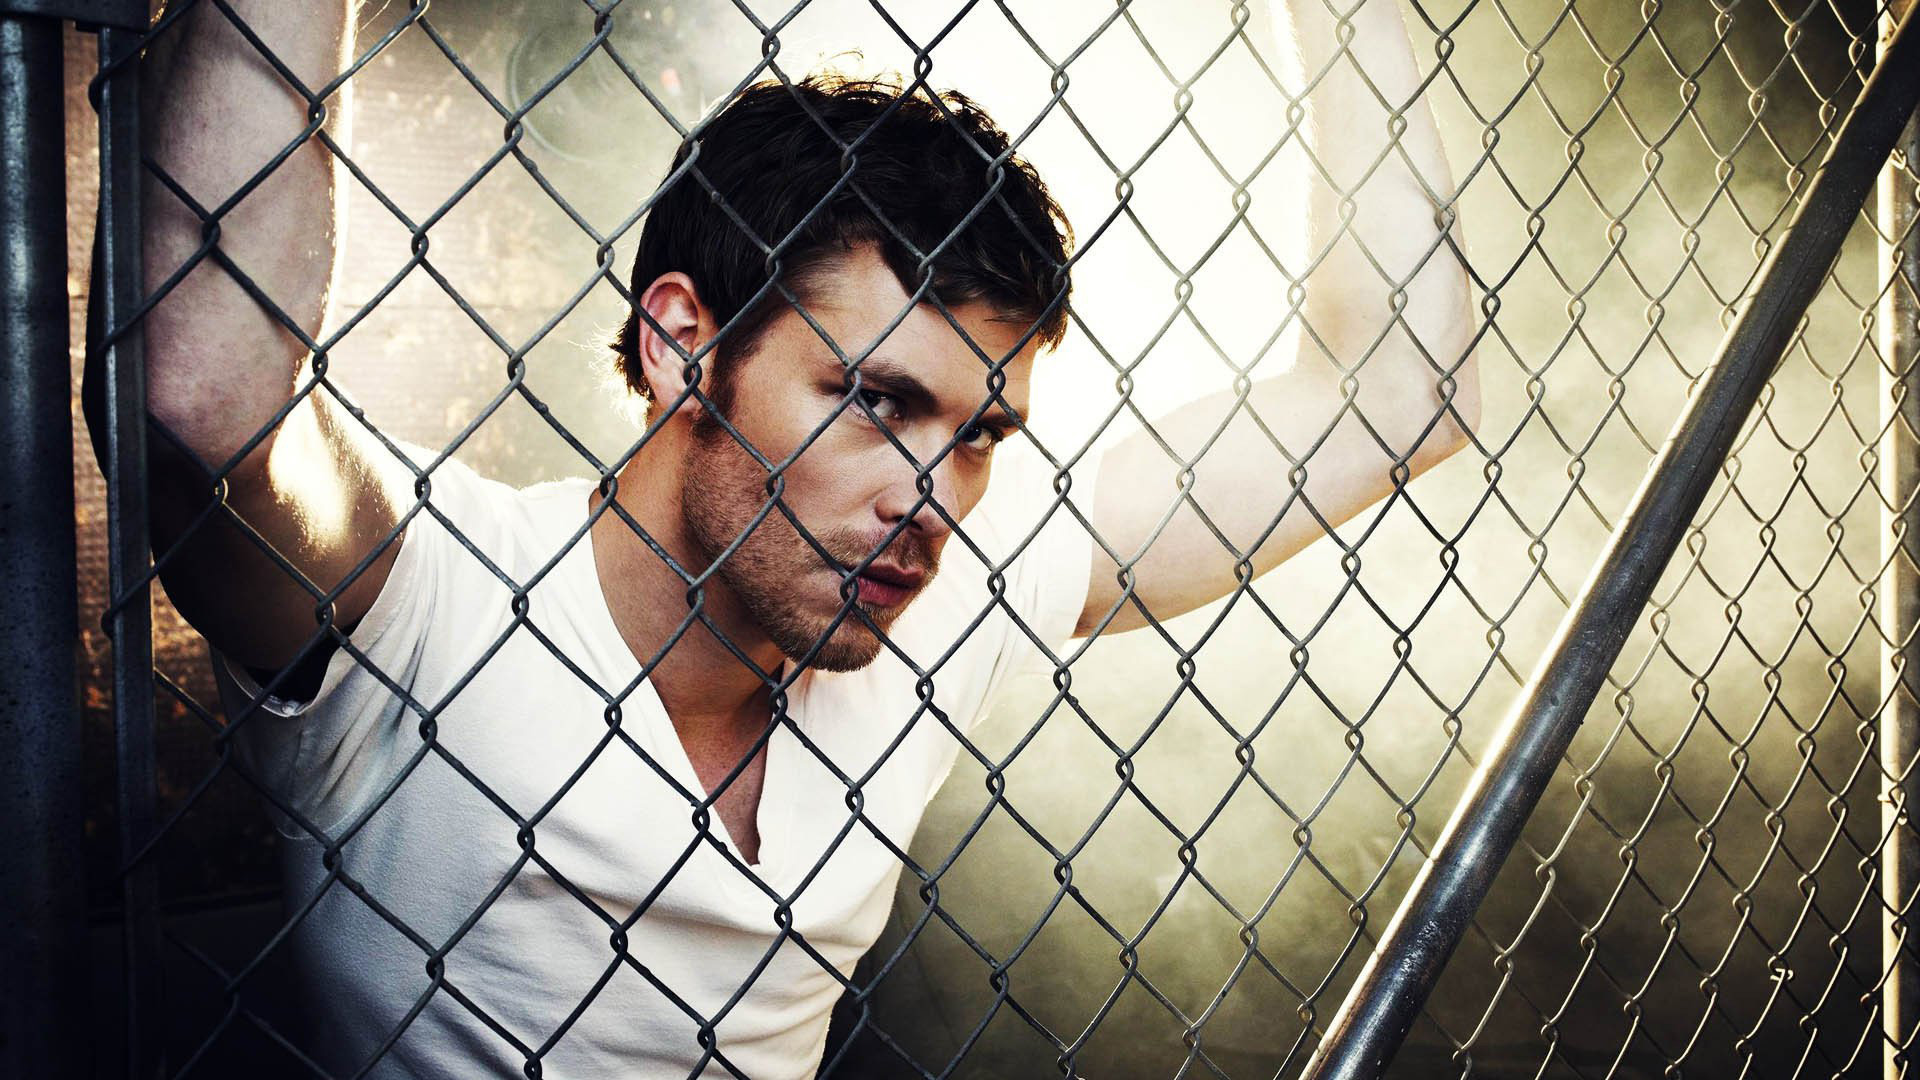 Damon Salvatore In White T-Shirt Near Chain Link Fence HD The Vampire Diaries